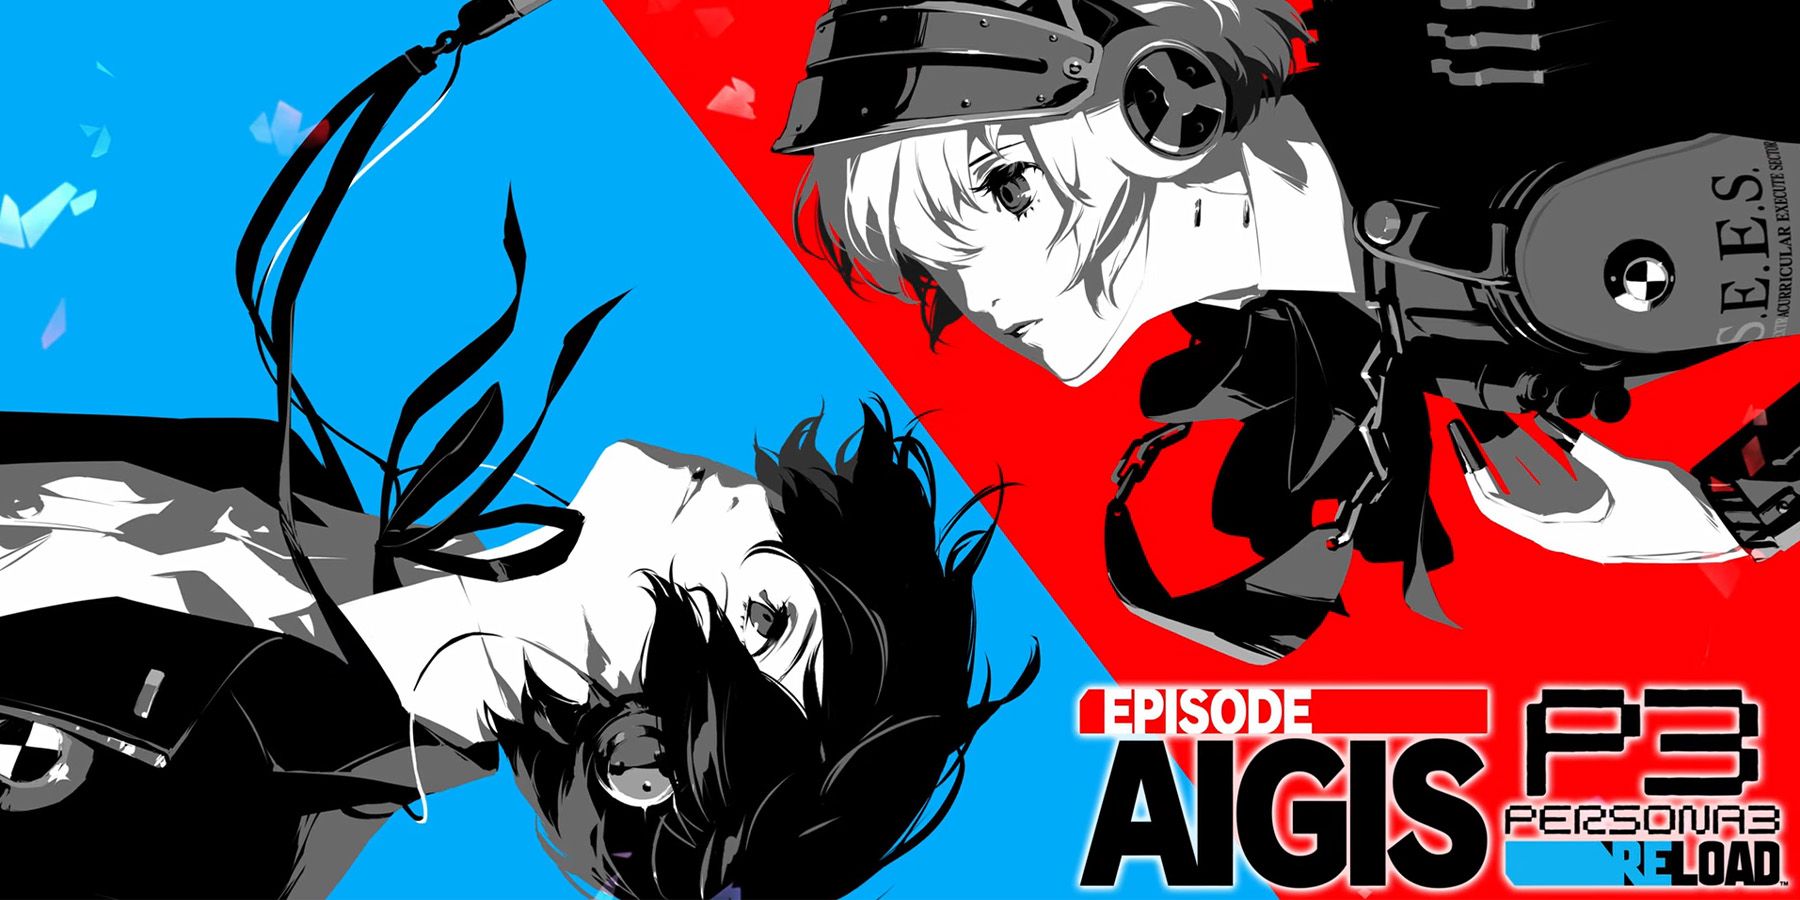 Persona 3 Reload Episode Aigis announcement trailer art-1